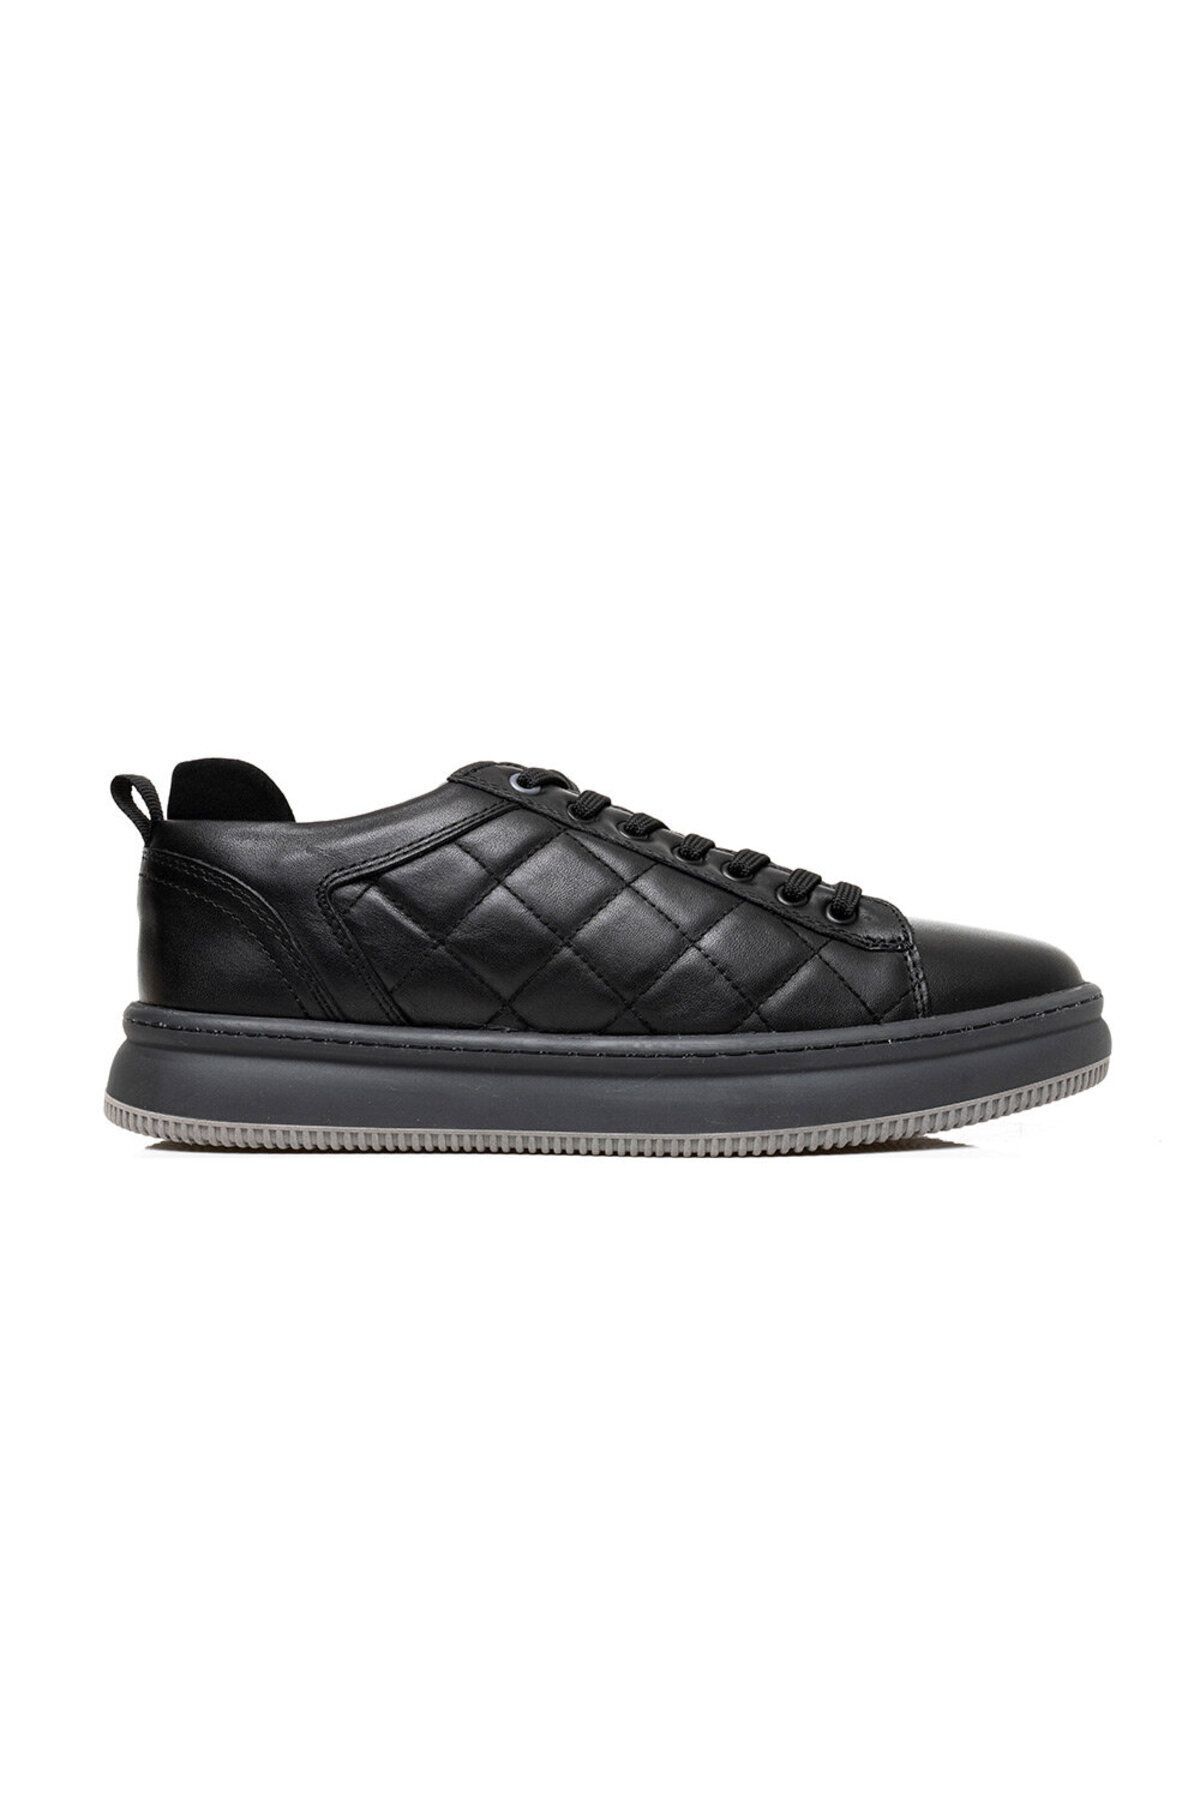 Greyder Erkek Siyah Hakiki Deri Sneaker Ayakkabı 3k1sa16381